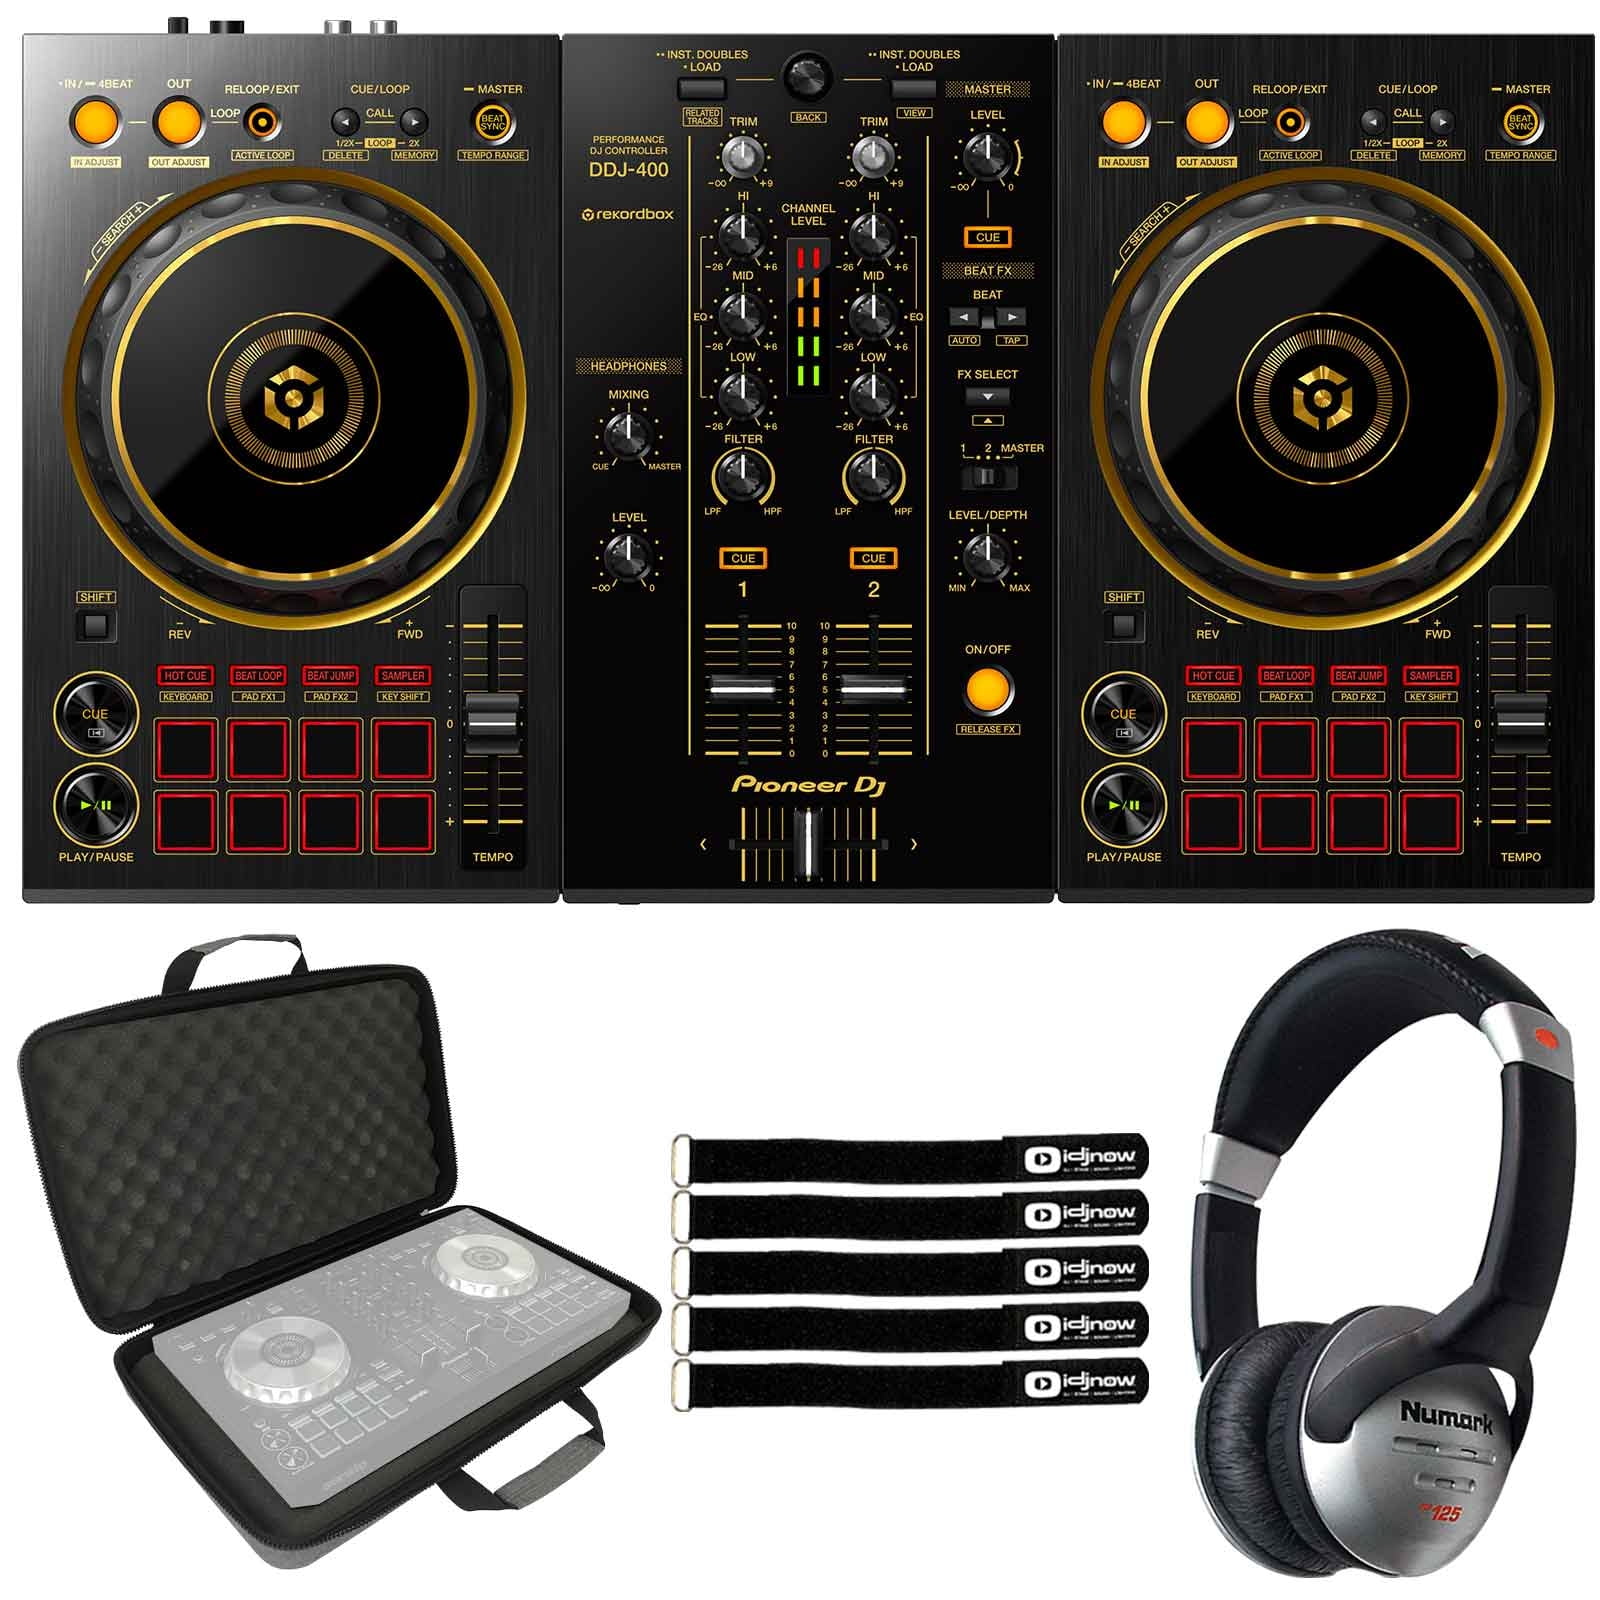 Pioneer Limited Edition DDJ-400 2-Chan rekordbox DJ Controller